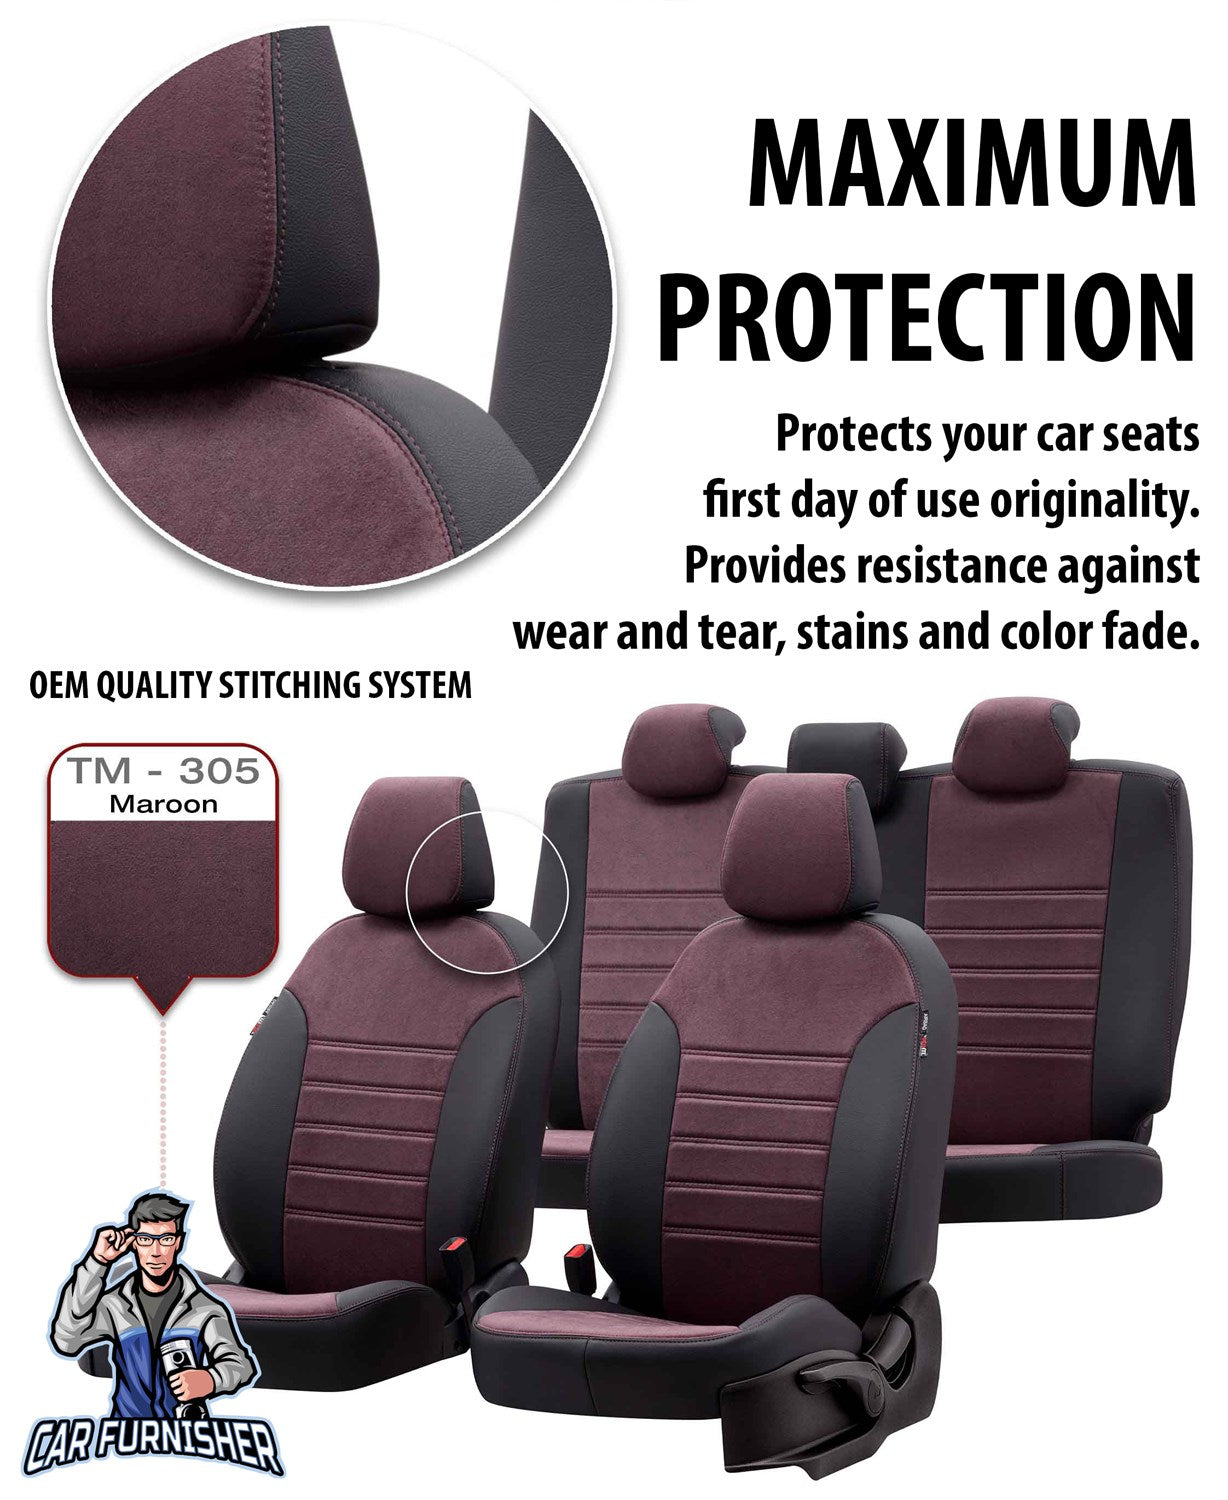 Skoda Rapid Seat Covers Milano Suede Design Burgundy Leather & Suede Fabric